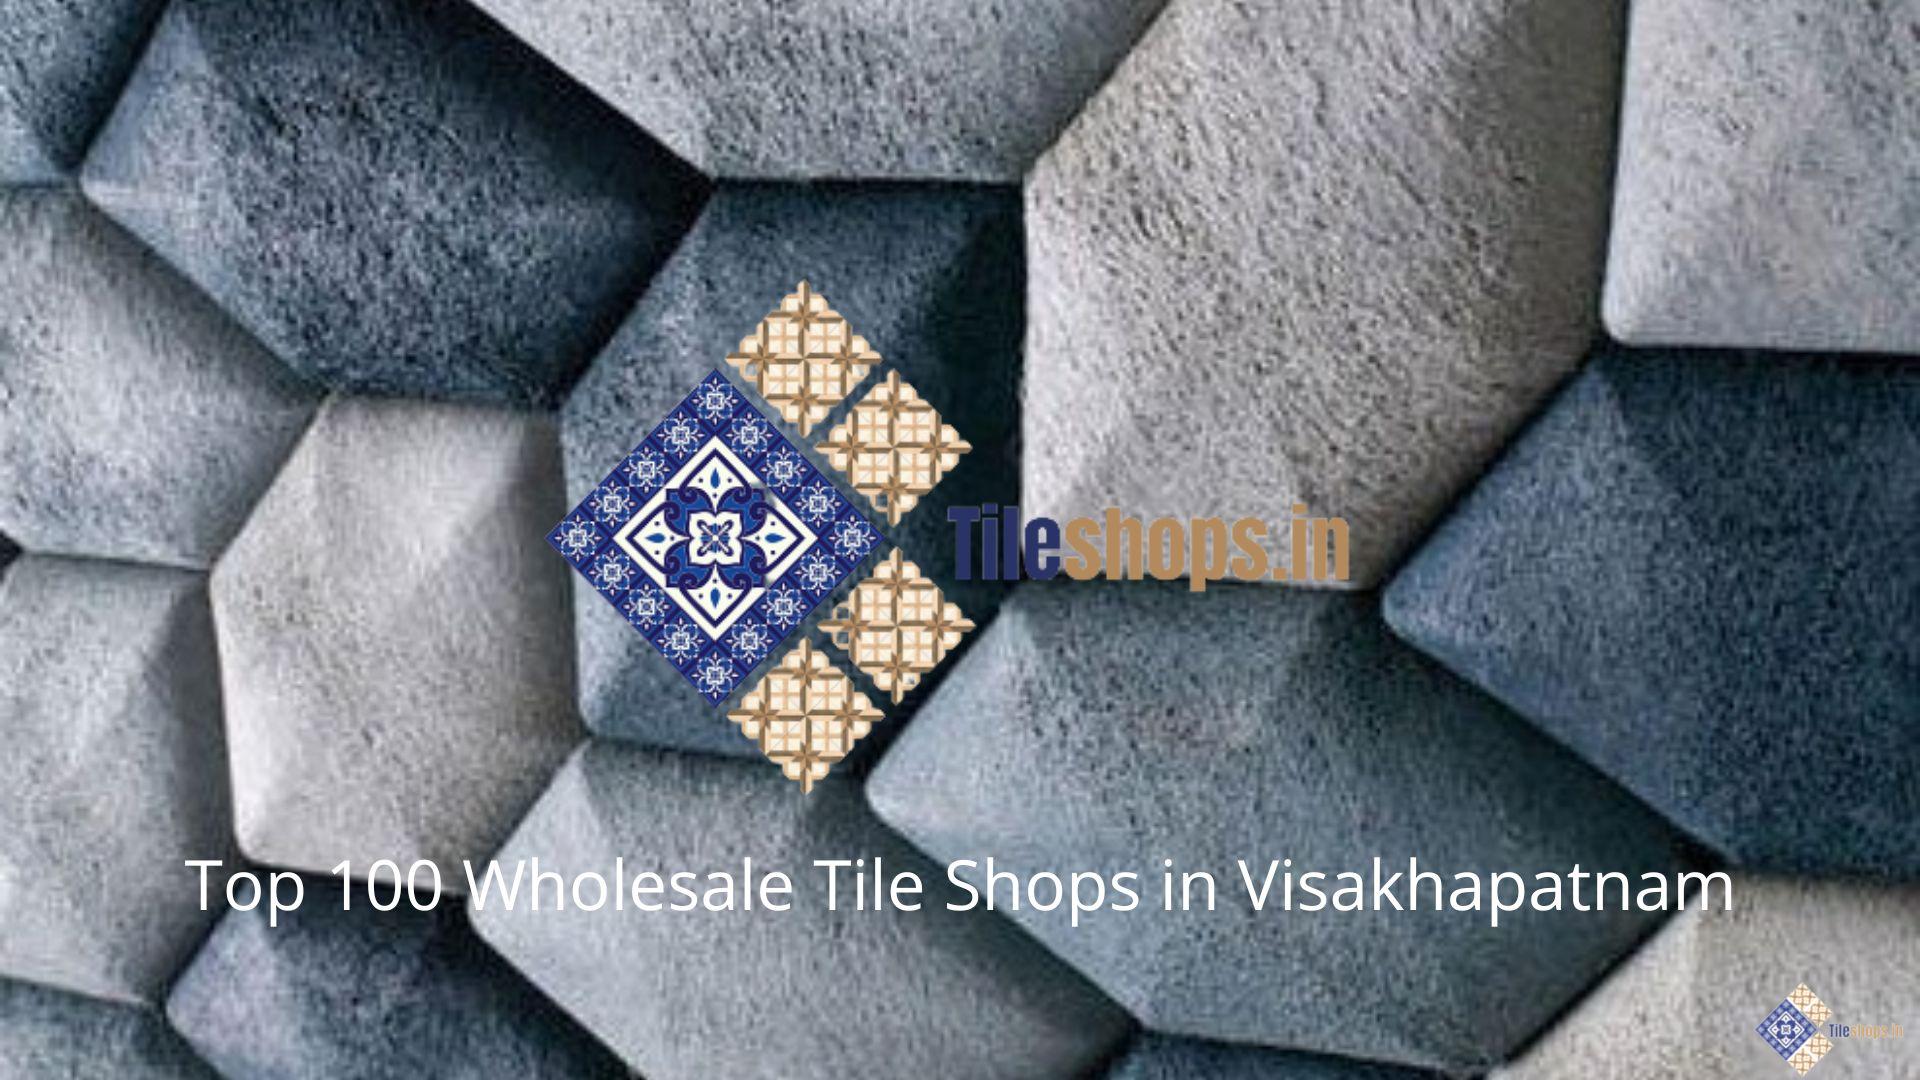 Top 100 Wholesale Tile Shops in Visakhapatnam